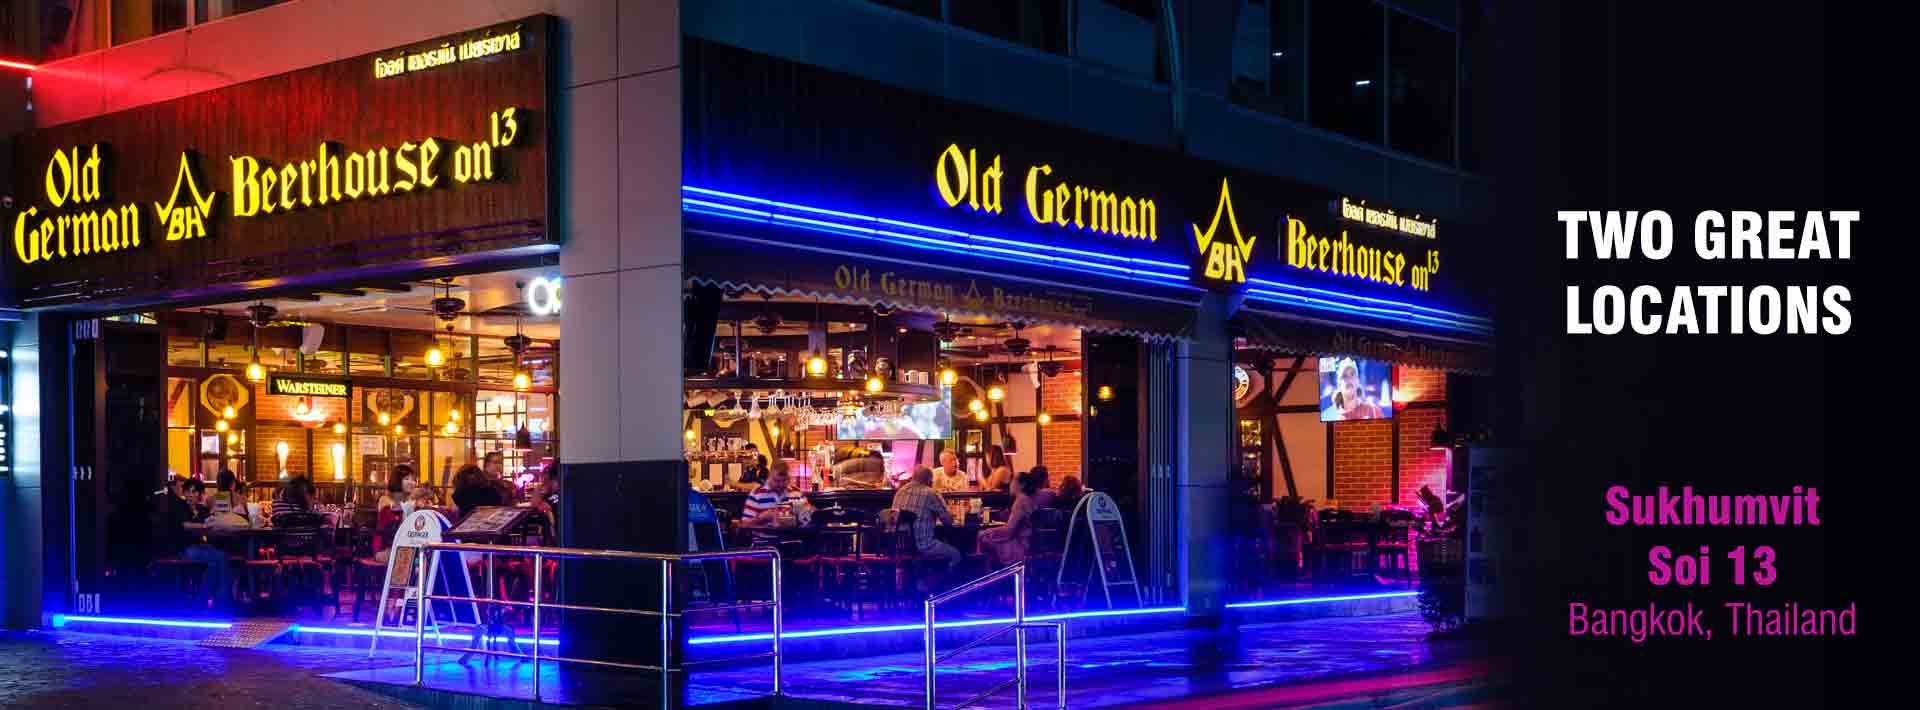 Old German Beerhouse - Soi 13 outside